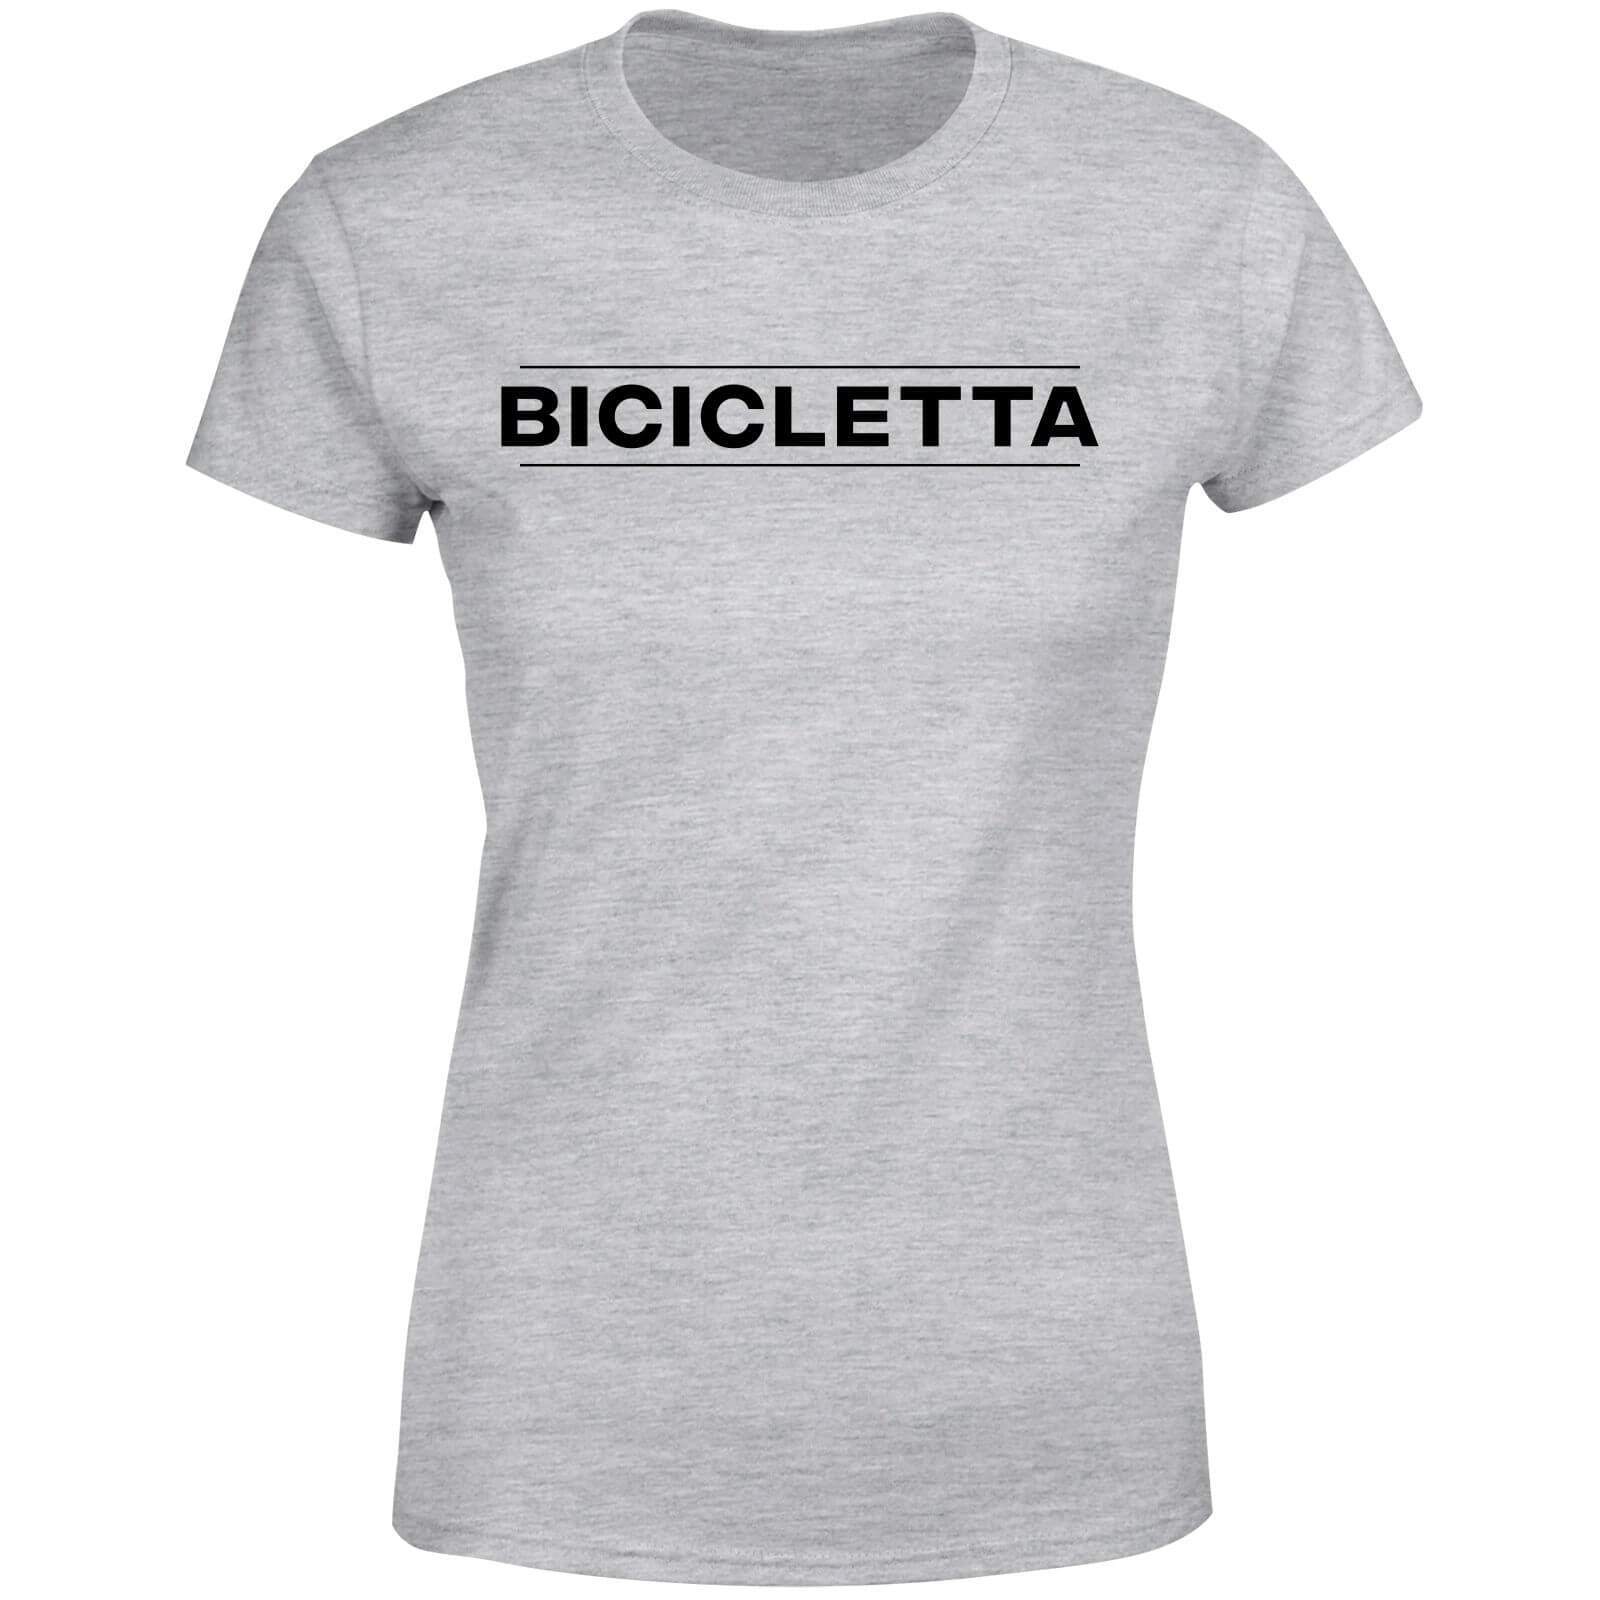 Bicicletta Women's T-Shirt - Grey - 5XL - Grey